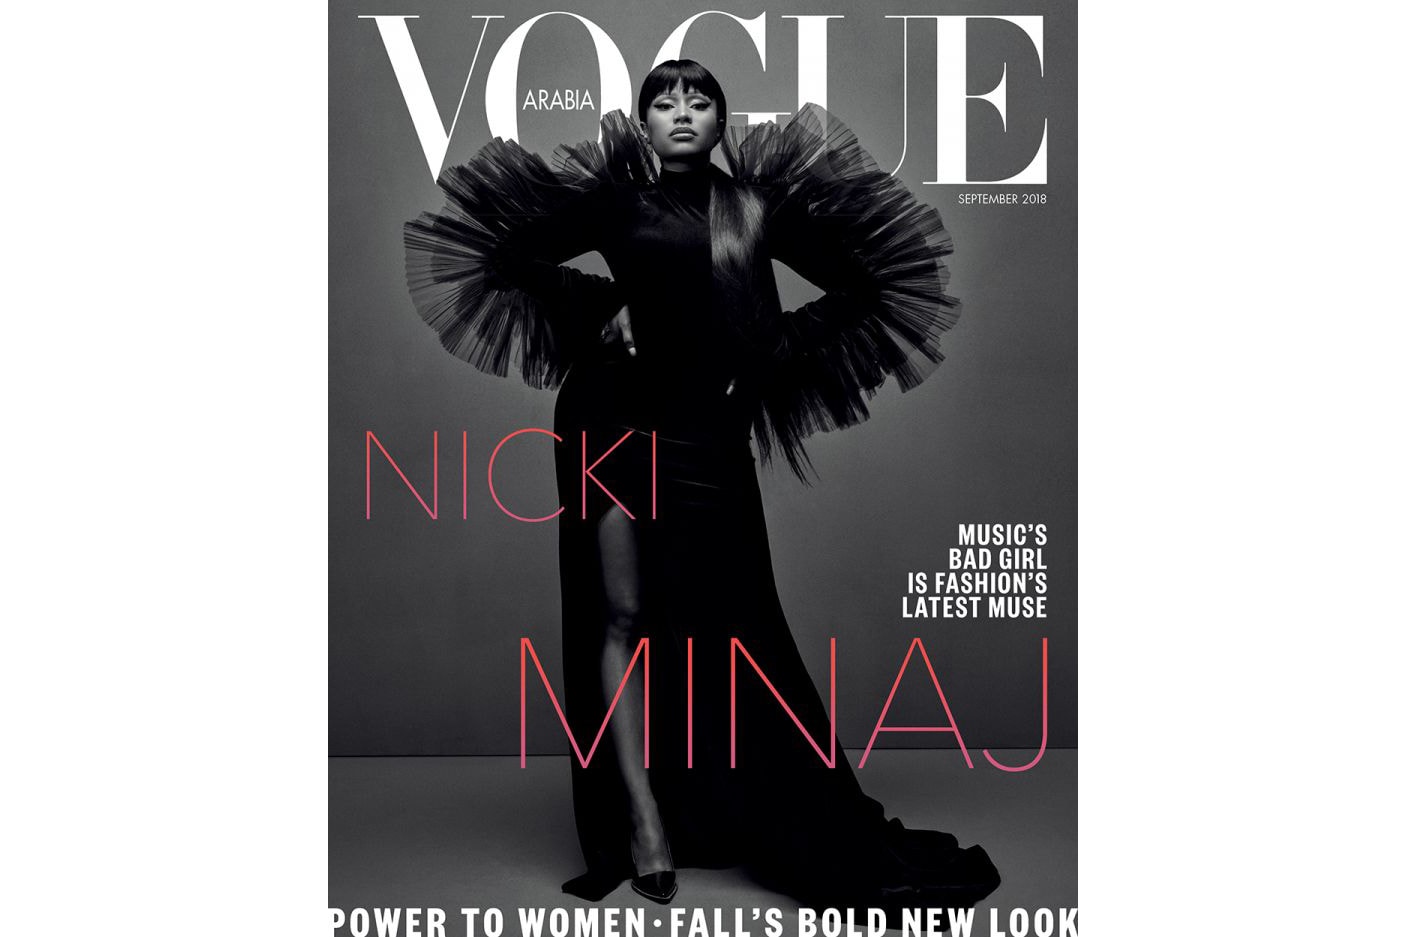 Nicki Minaj Vogue Arabia September 2018 Issue Cover Christian Siriano Dress Black